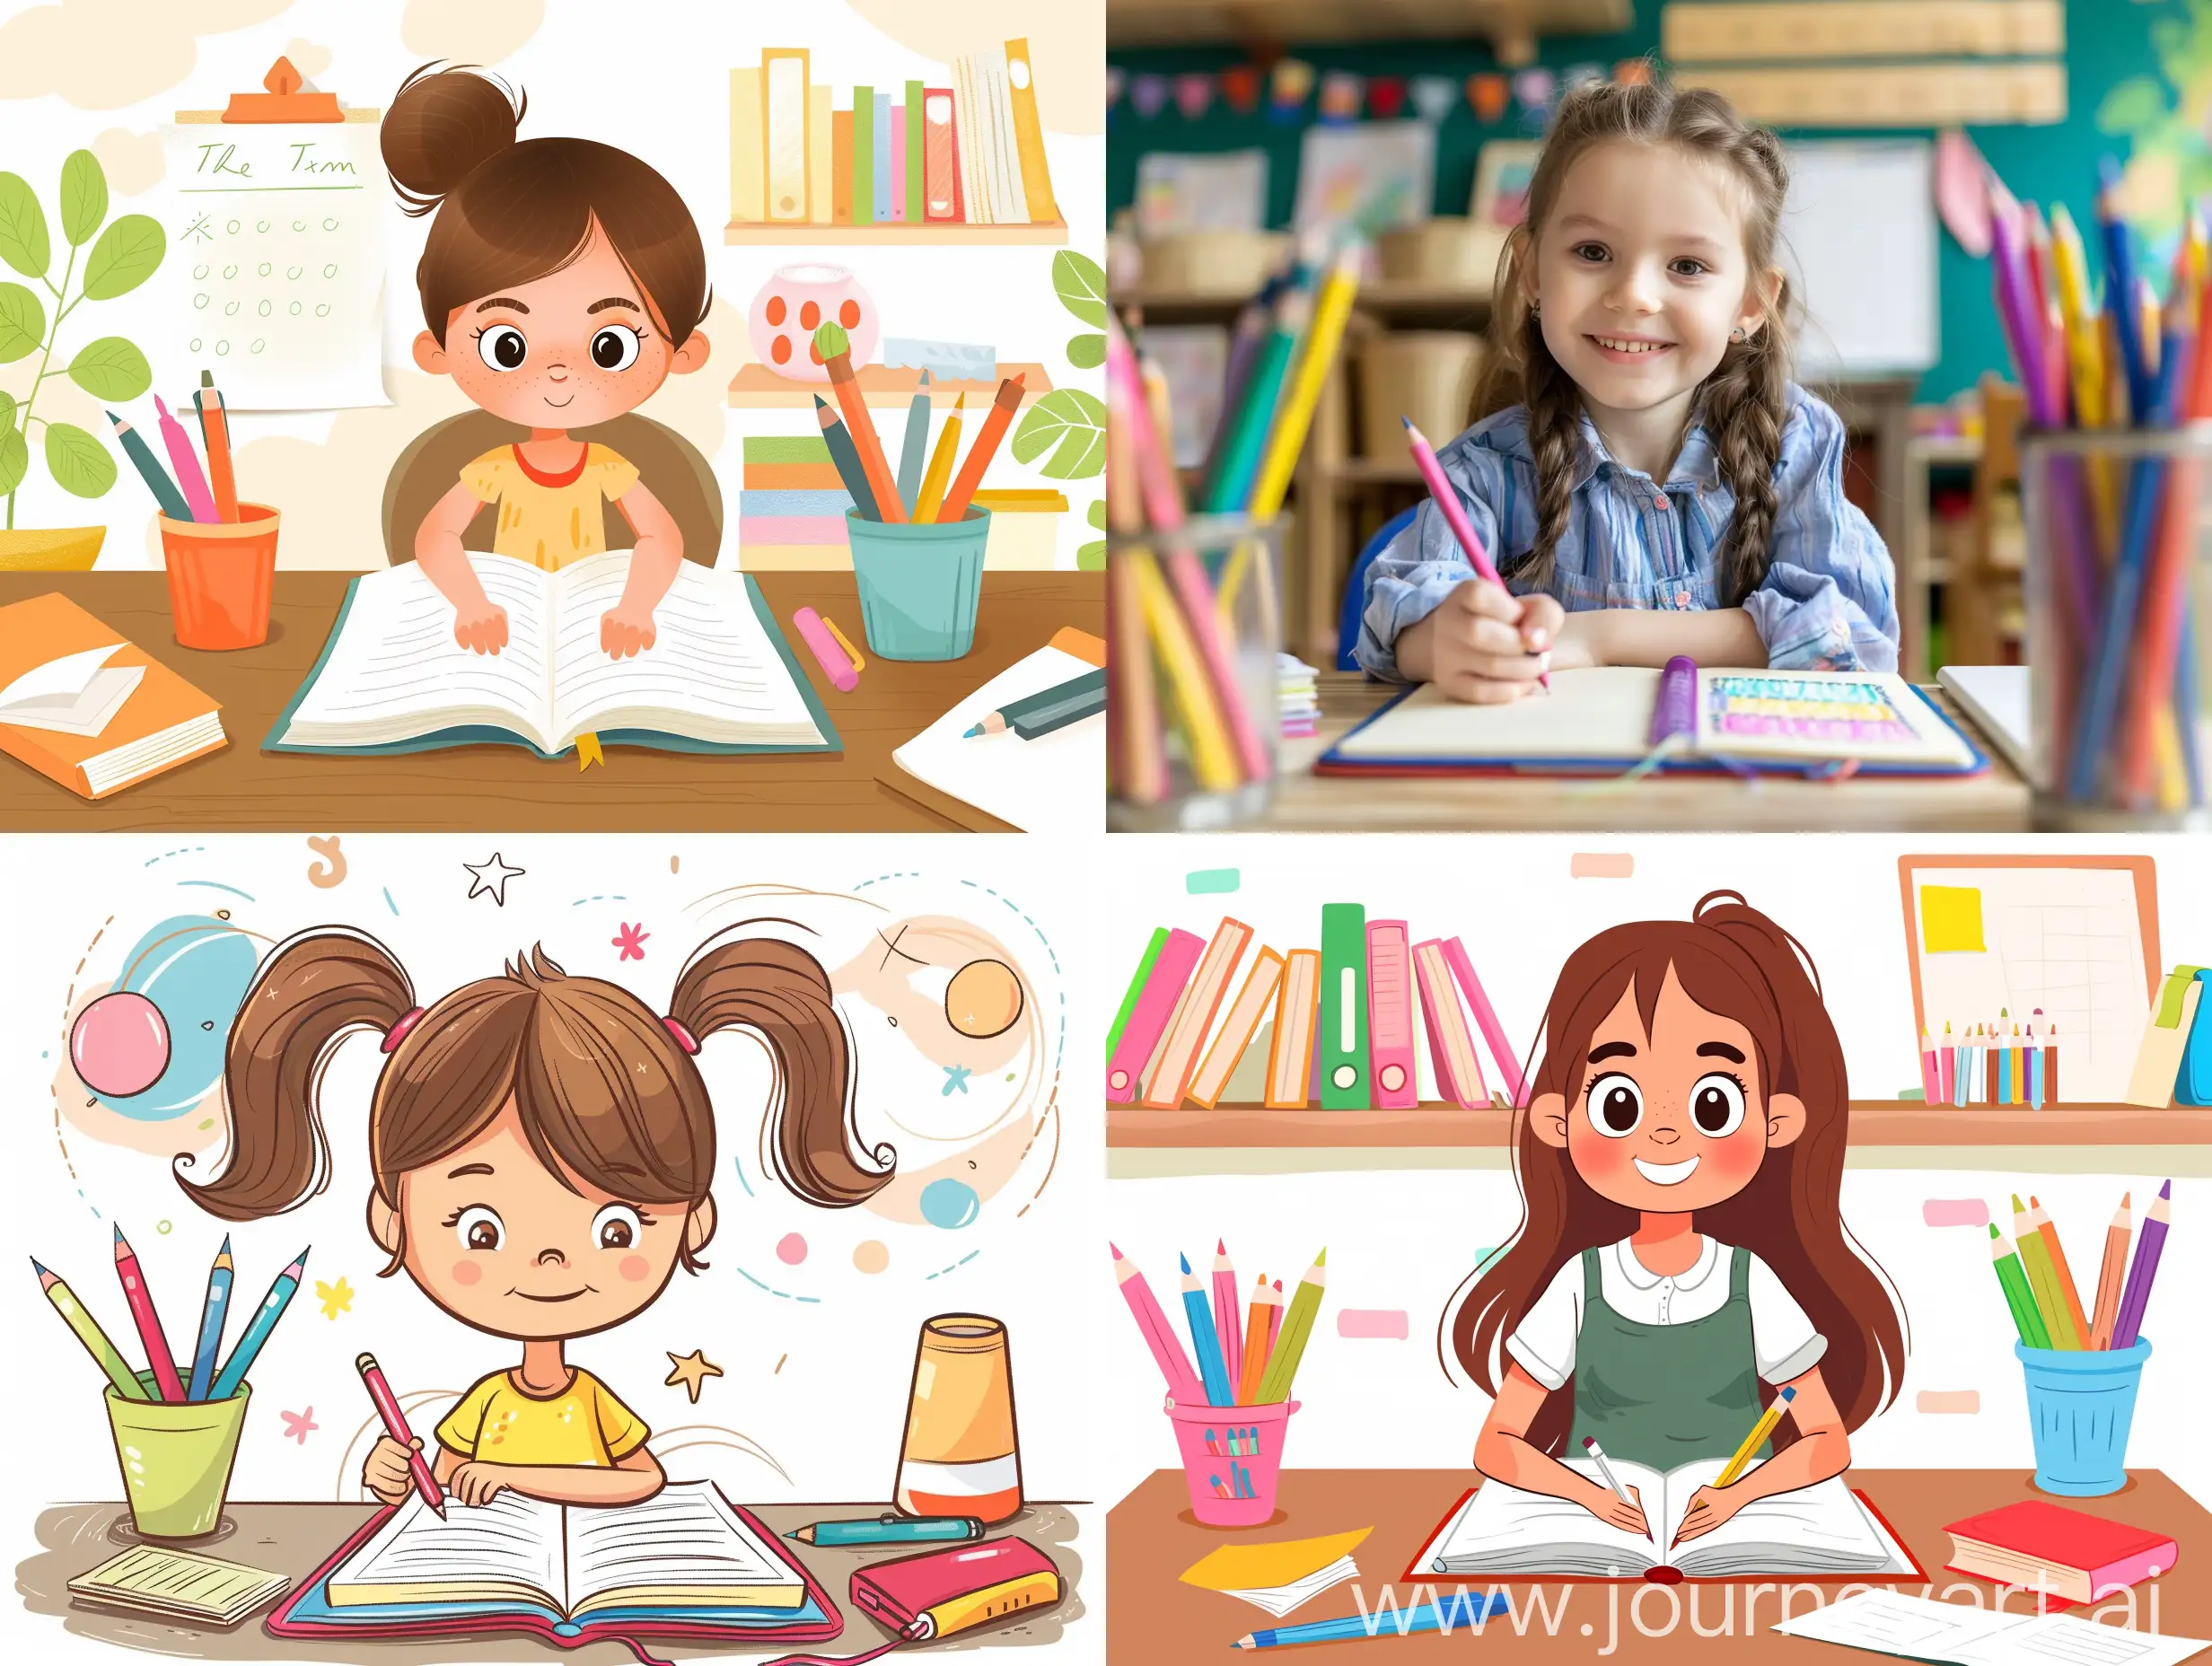 Happy-Preschool-Girl-Coloring-in-Classroom-Exam-Creative-Art-and-Education